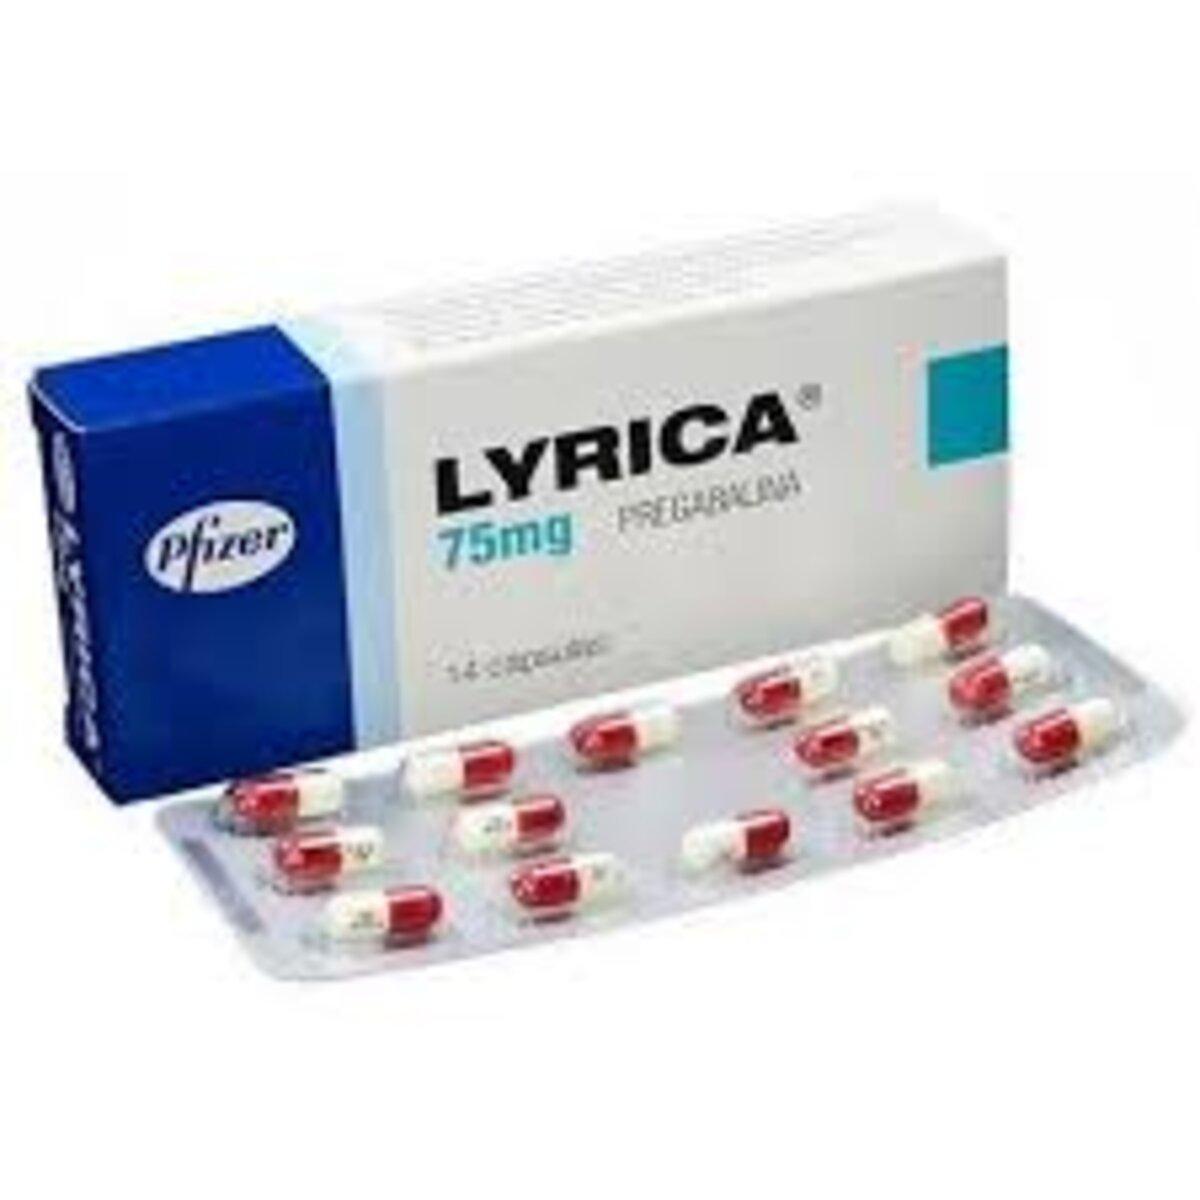 Lyrica 75mg Capsules - Pregabalin 75mg, 28 Capsules - Asset Pharmacy